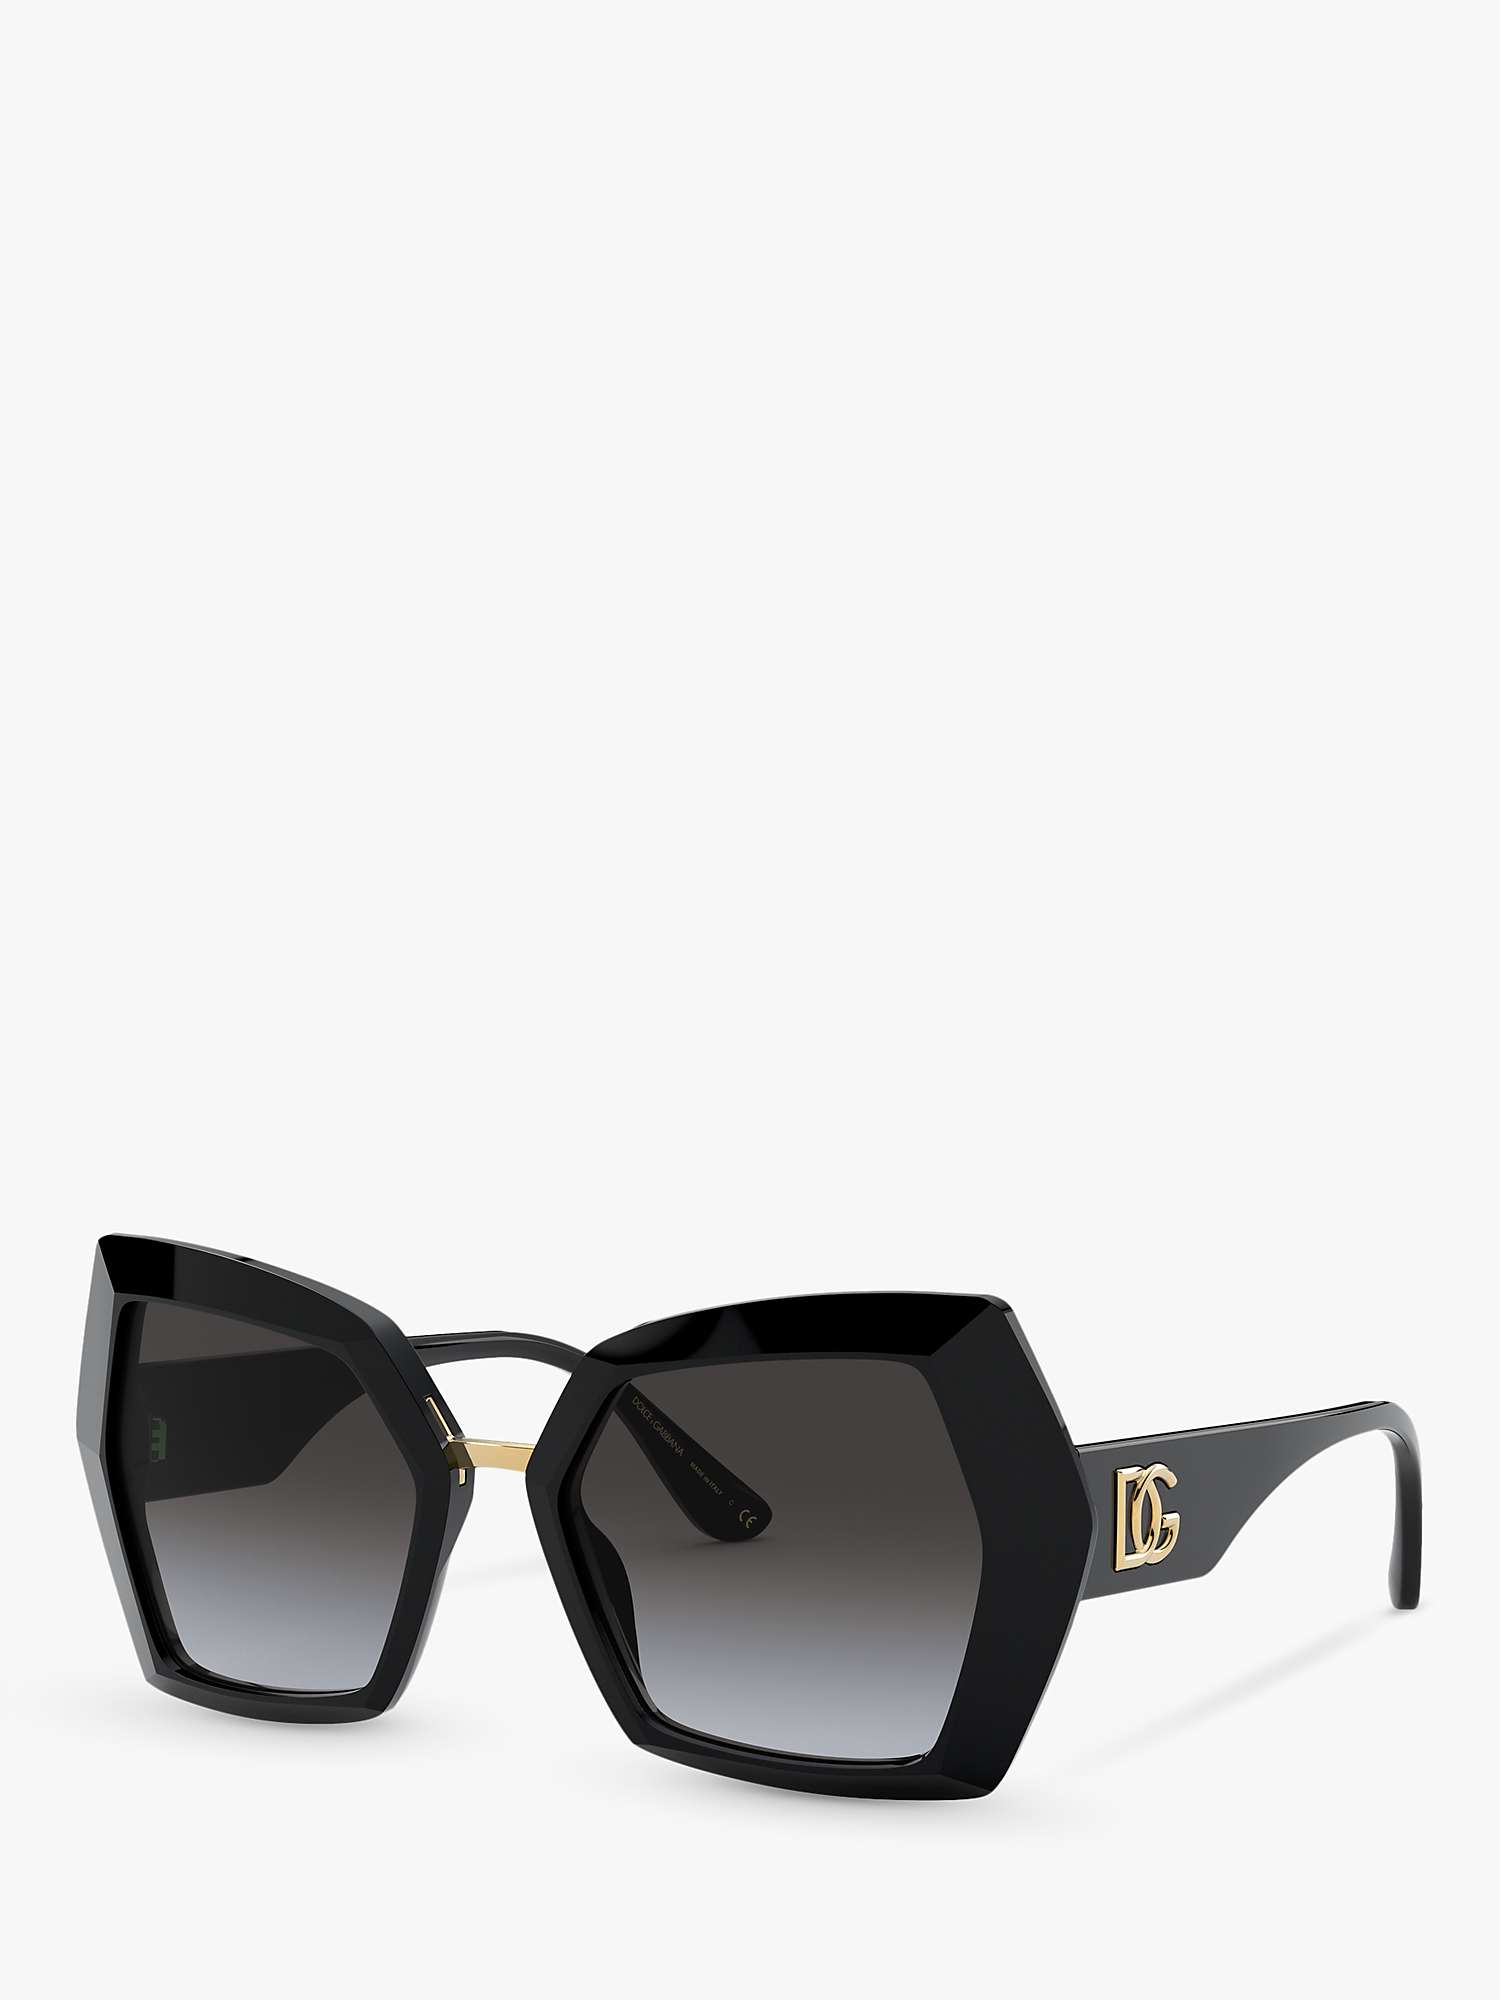 Buy Dolce & Gabbana DG4377 Women's Chunky Hexagonal Cat's Eye Sunglasses, Black/Grey Gradient Online at johnlewis.com